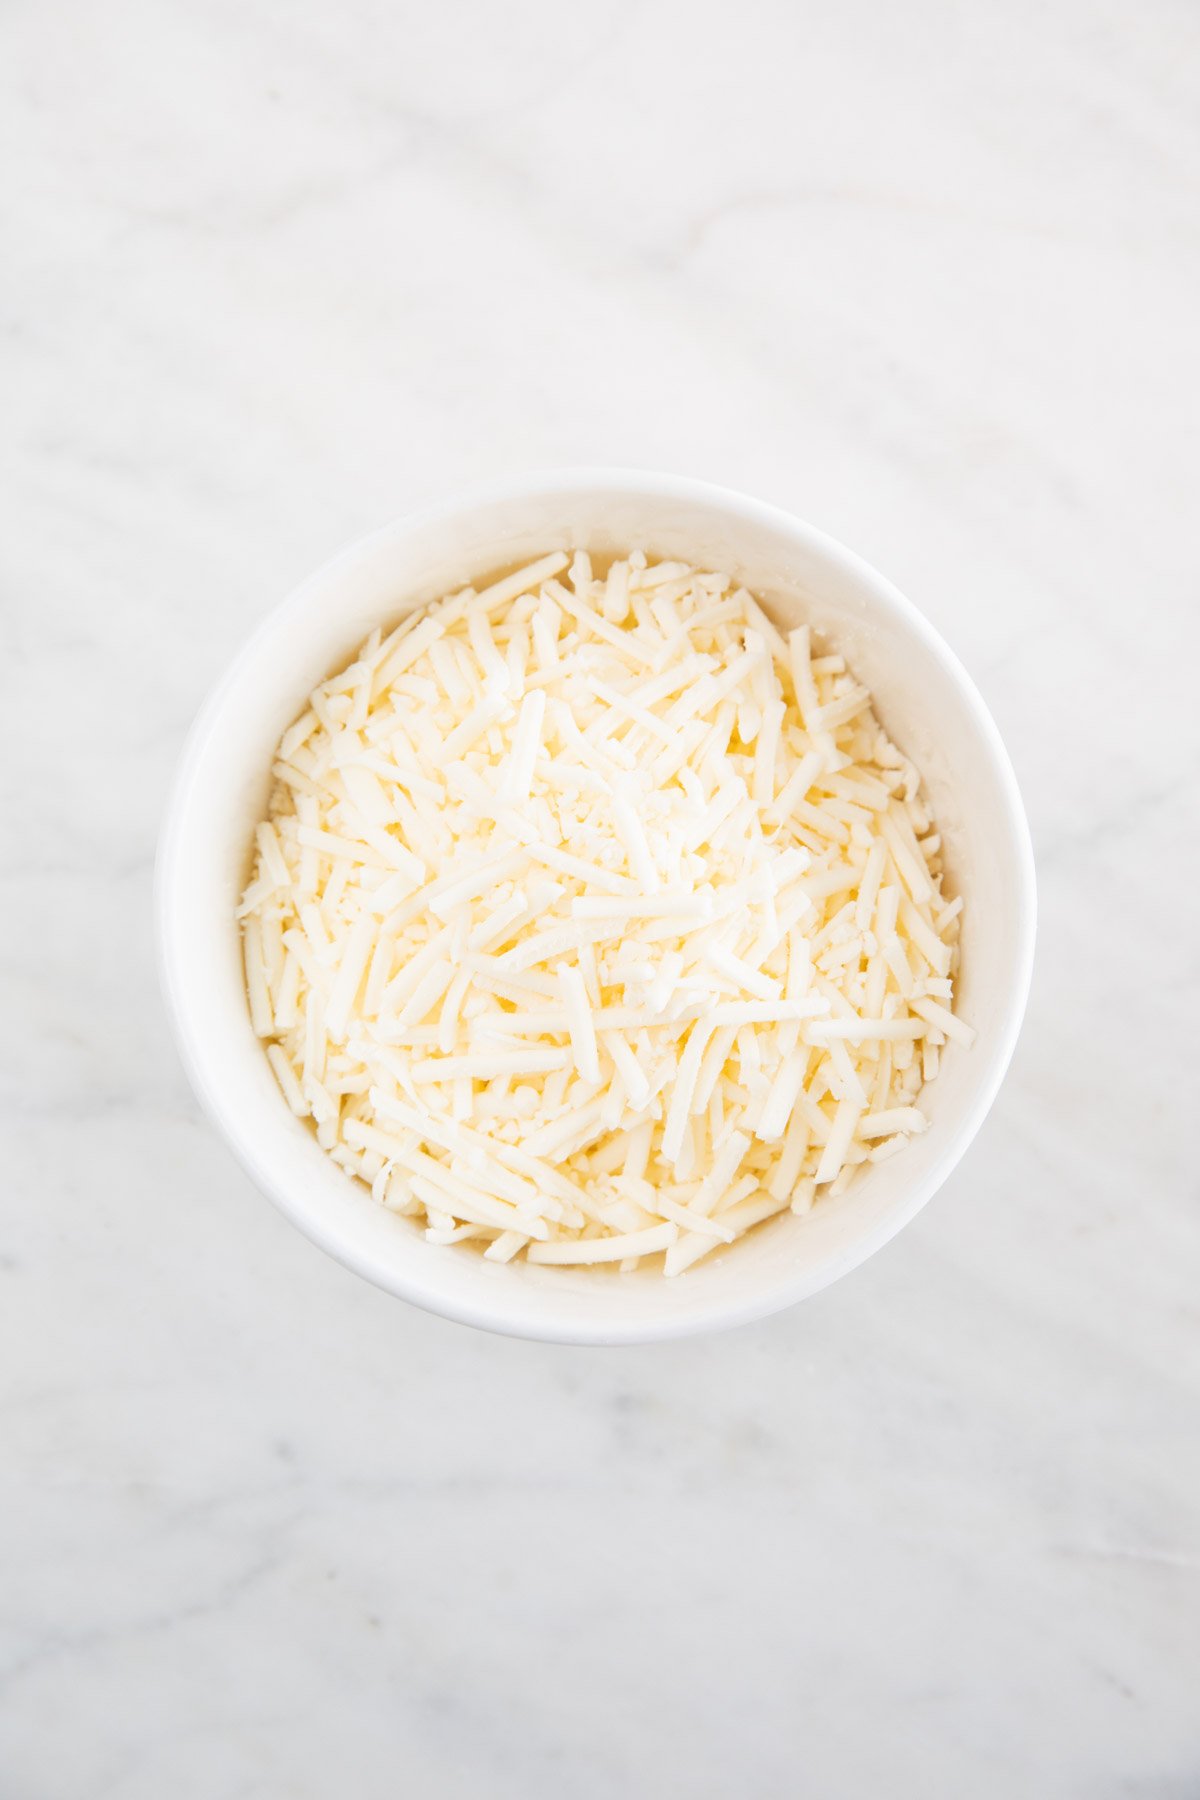 A bowl with shredded vegan mozzarella.